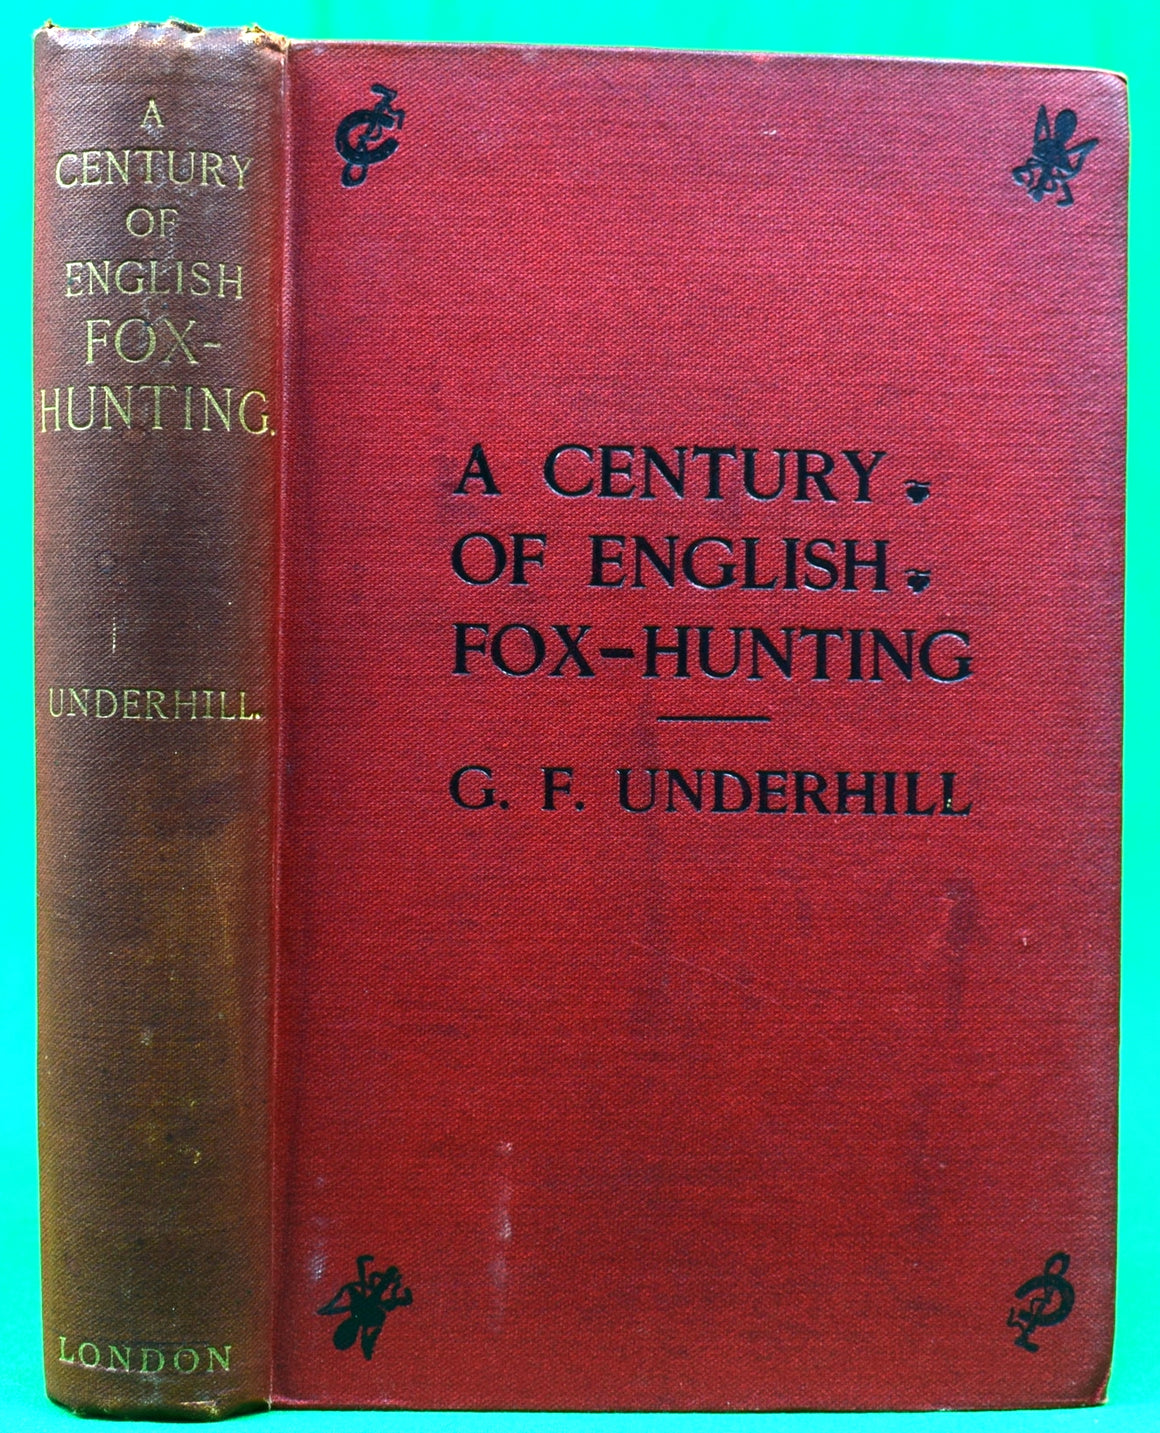 "A Century Of English Fox-Hunting" 1900 UNDERHILL, George F.